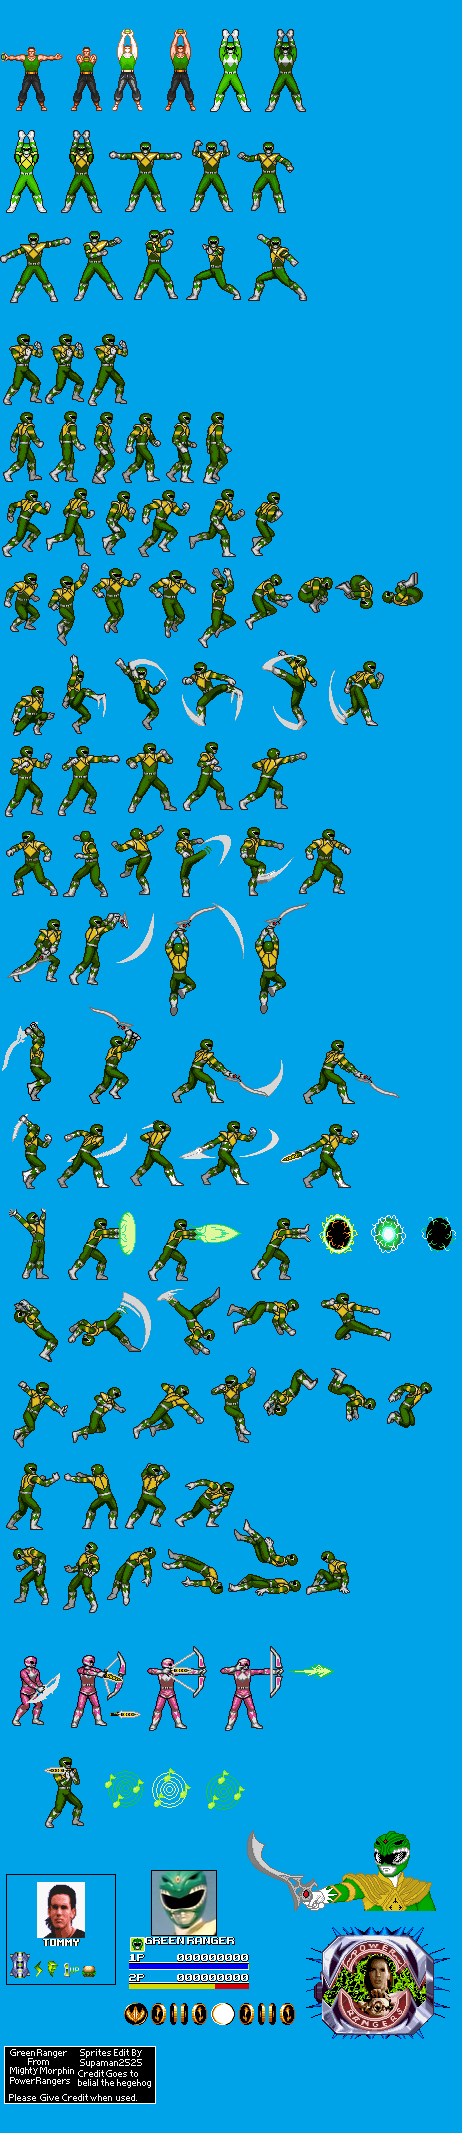 Green Ranger (Power Rangers Genesis-Style)